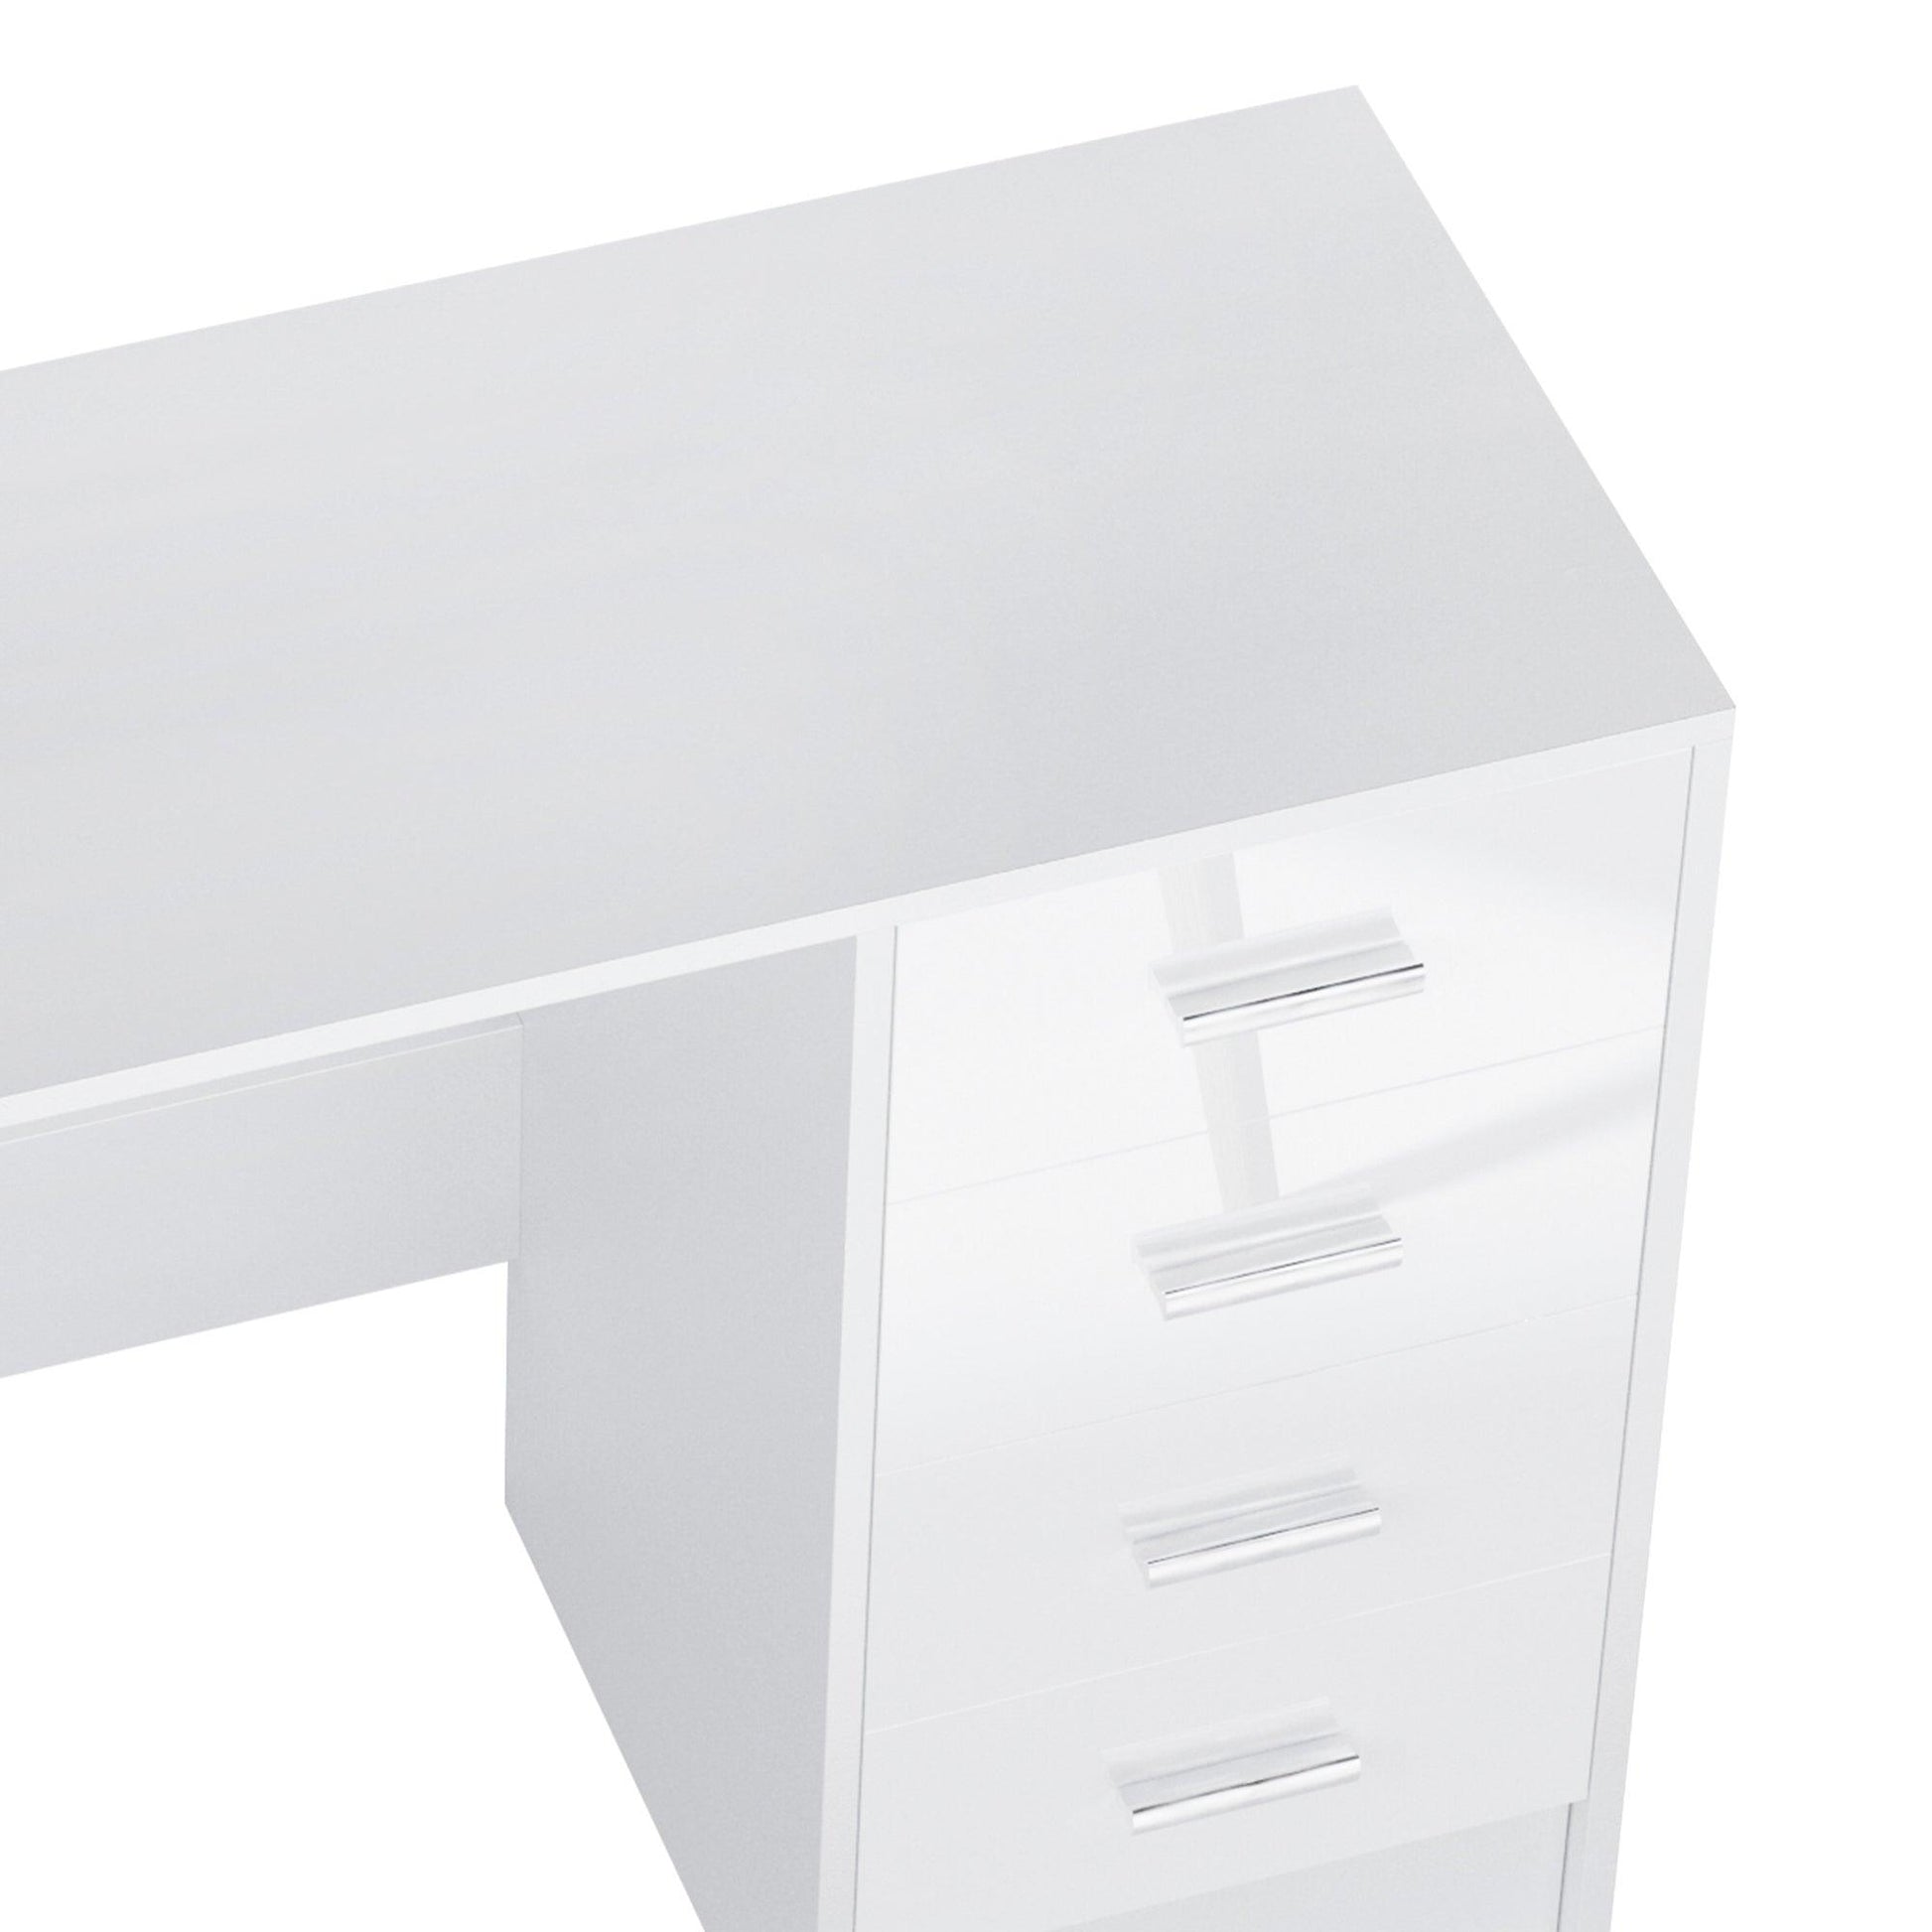 HOMCOM White Writing Desk with 4 Drawers - ALL4U RETAILER LTD